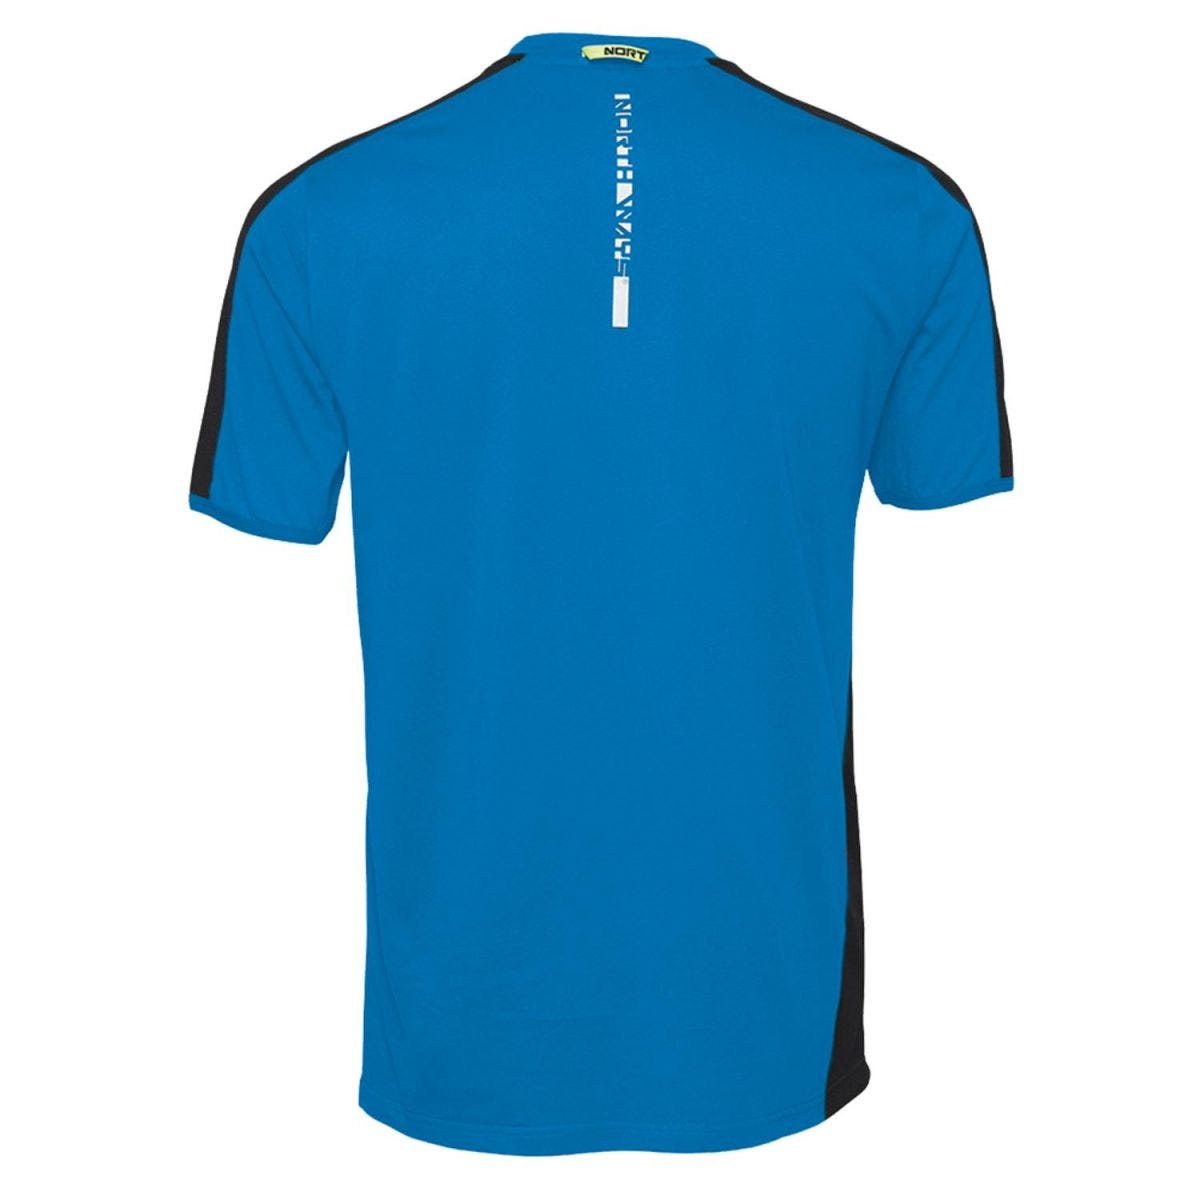 Tee-shirt à manches courtes pour homme Andy bleu - North Ways - Taille 4XL 1